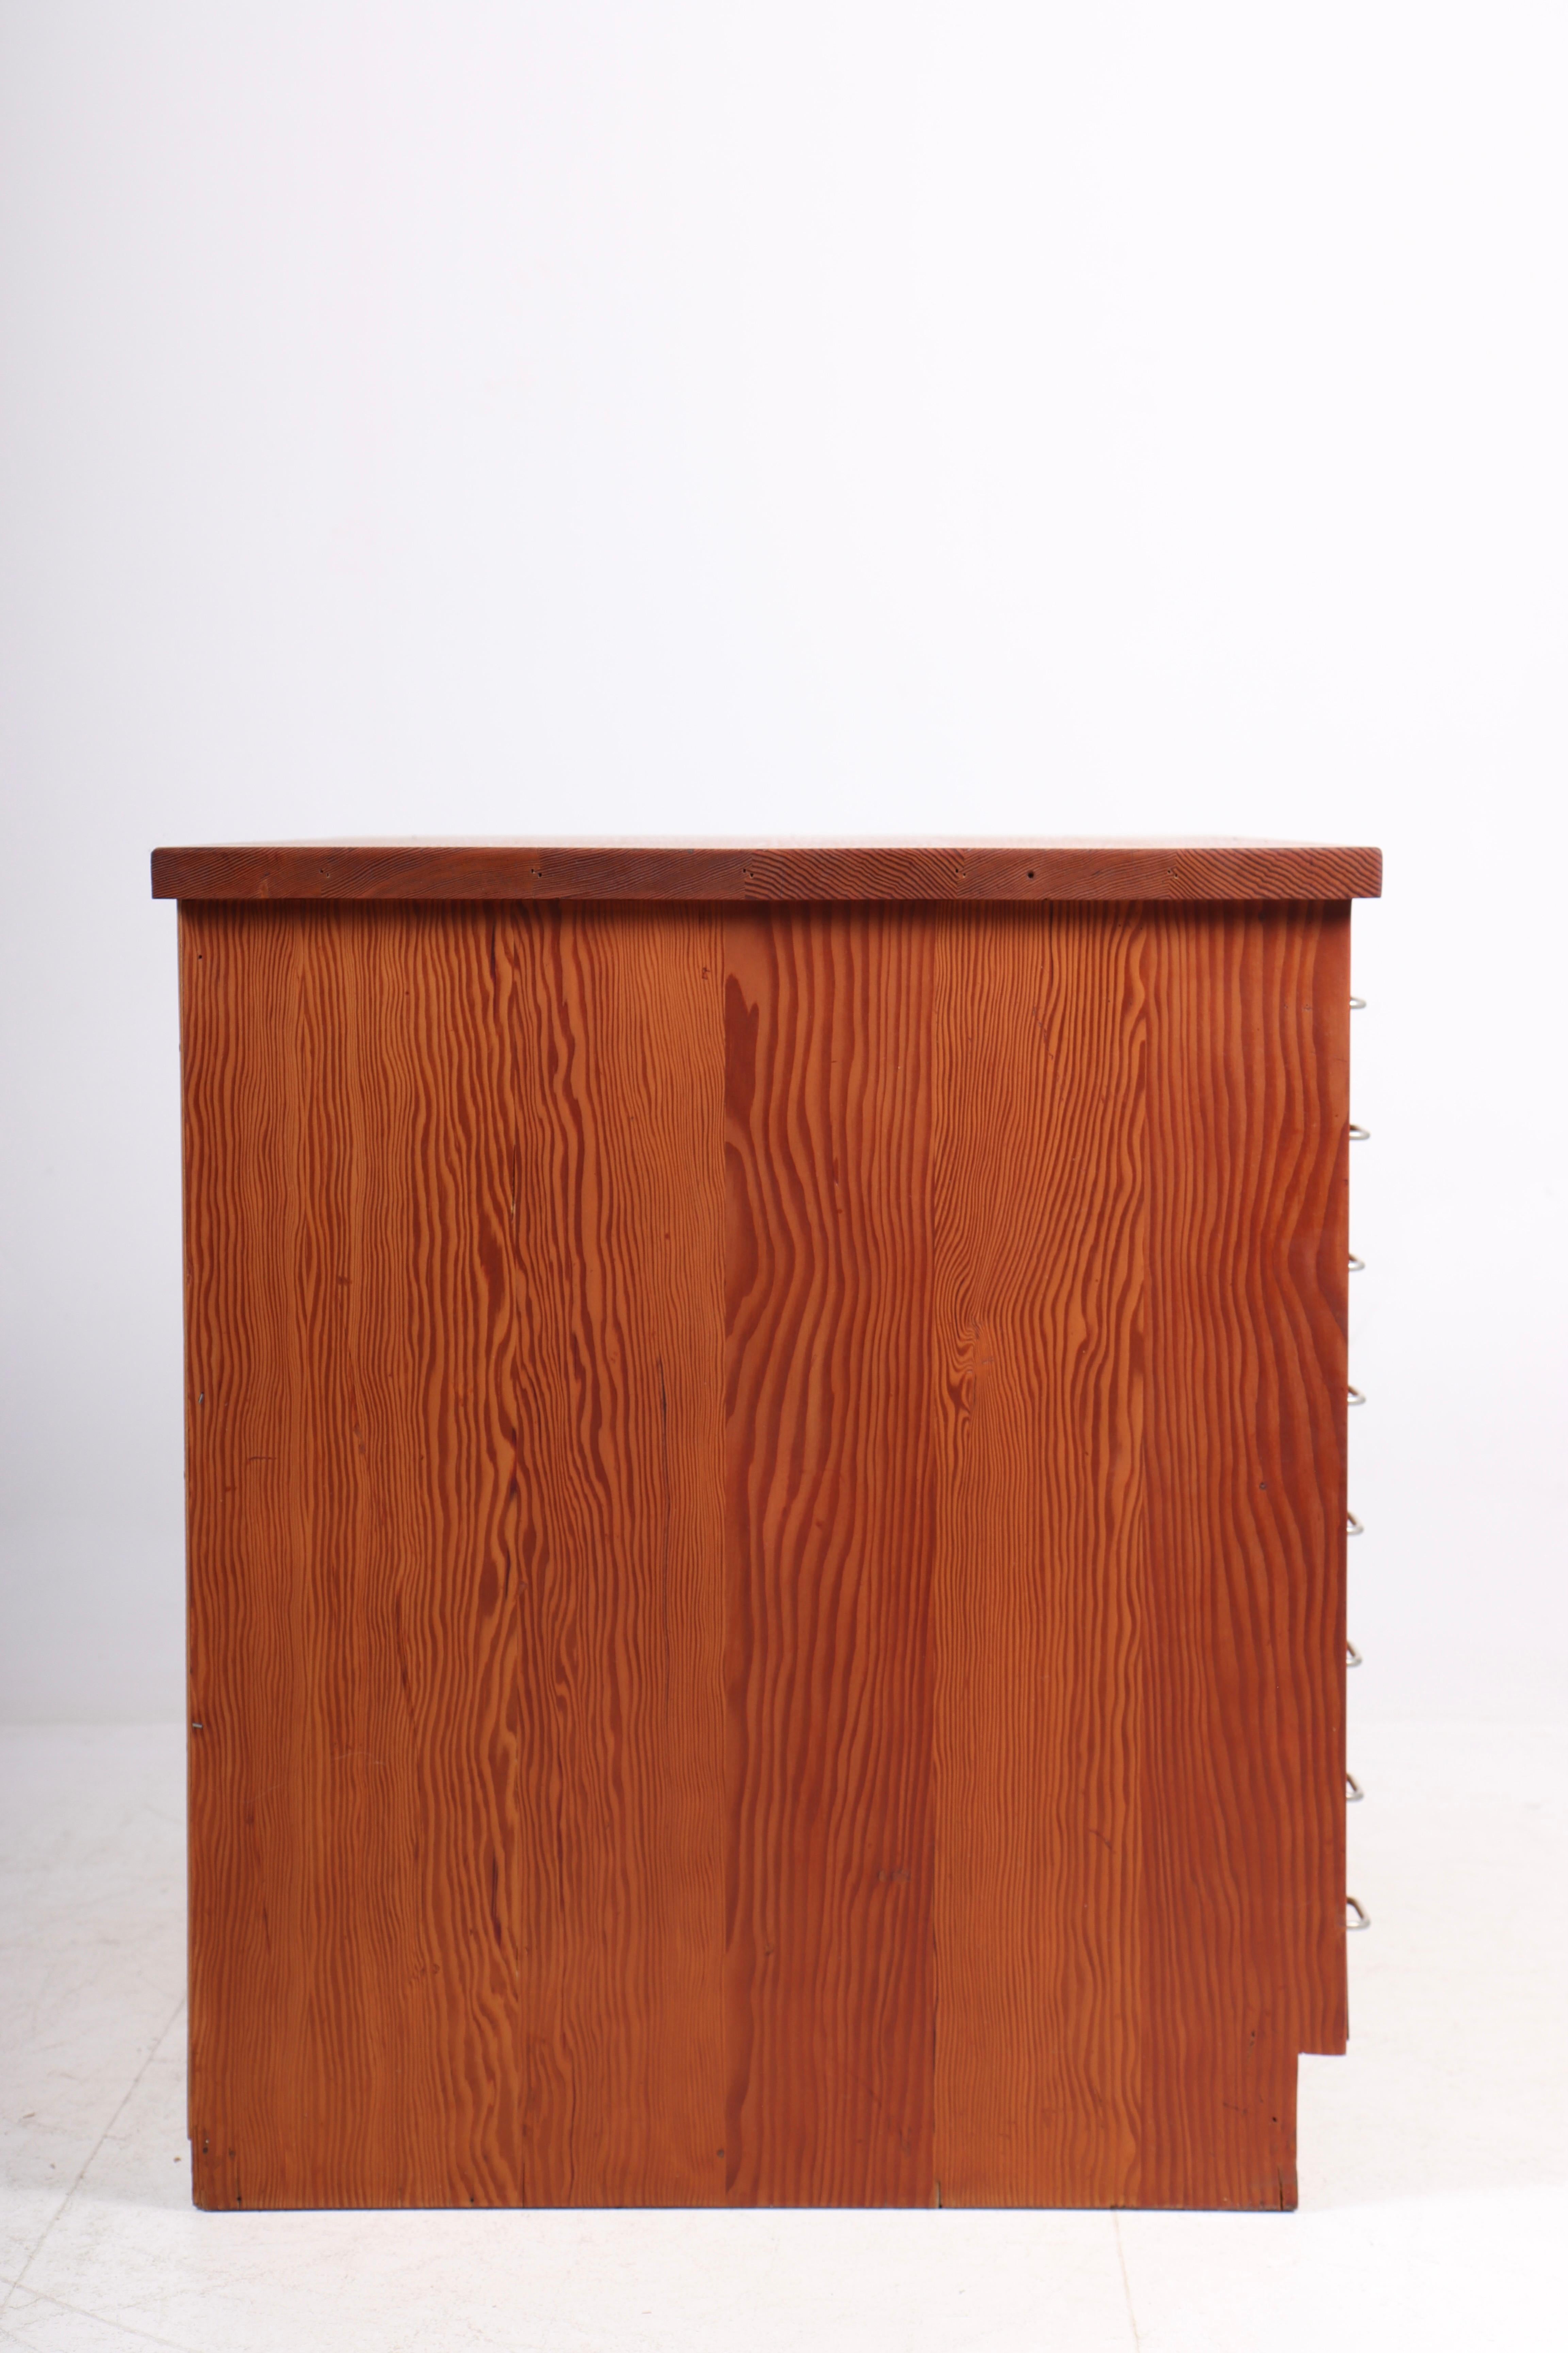 Midcentury File Cabinet in Oregon Pine, Danish Design, 1960s 4